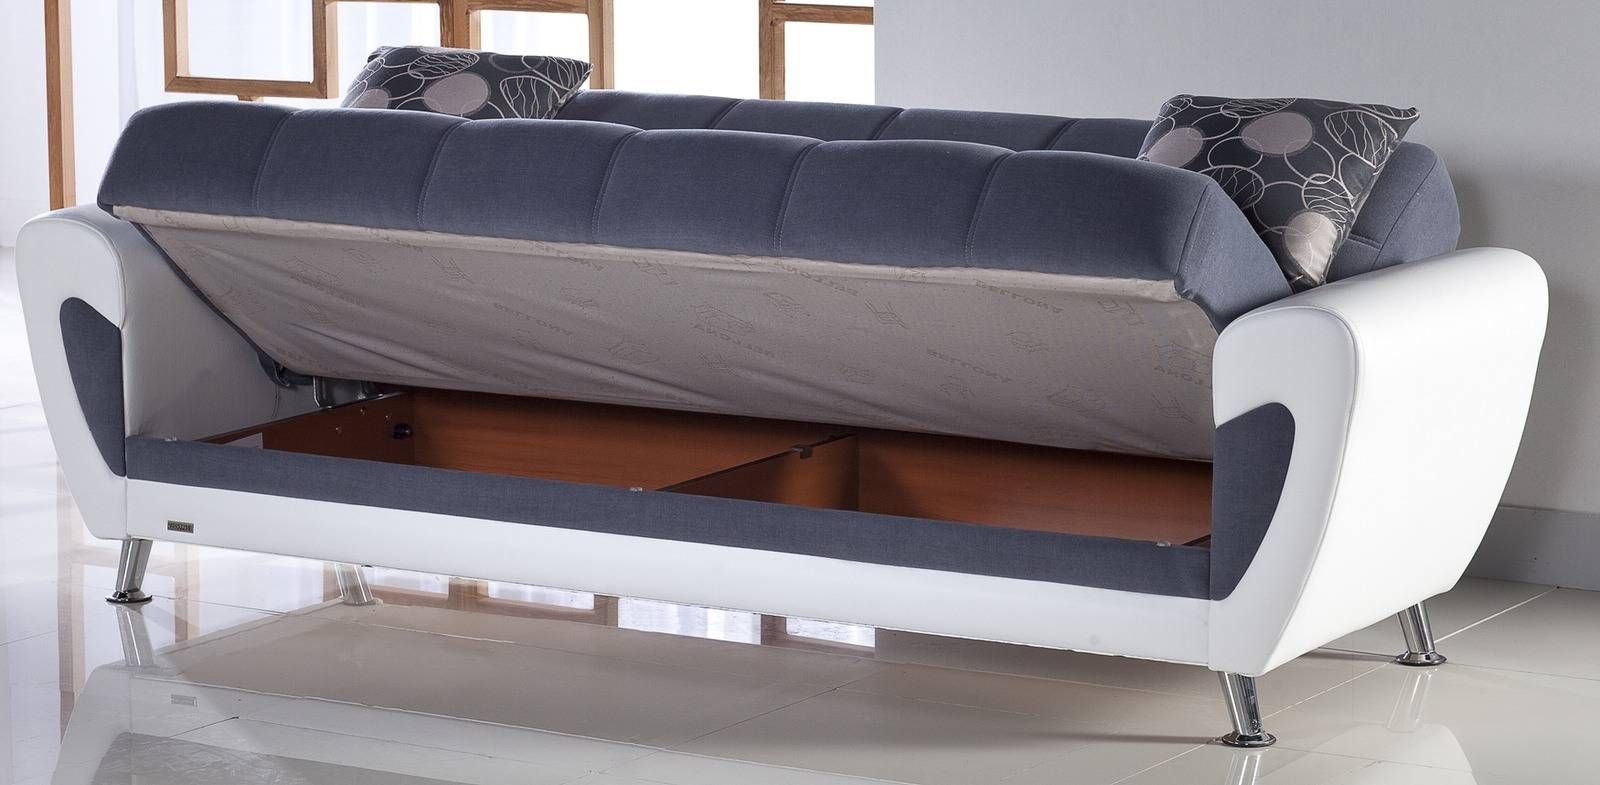 Furniture: Elegant Hideabed For Comfortable Sofa Bed Design Ideas Regarding Castro Convertible Sofa Beds (Photo 12 of 15)